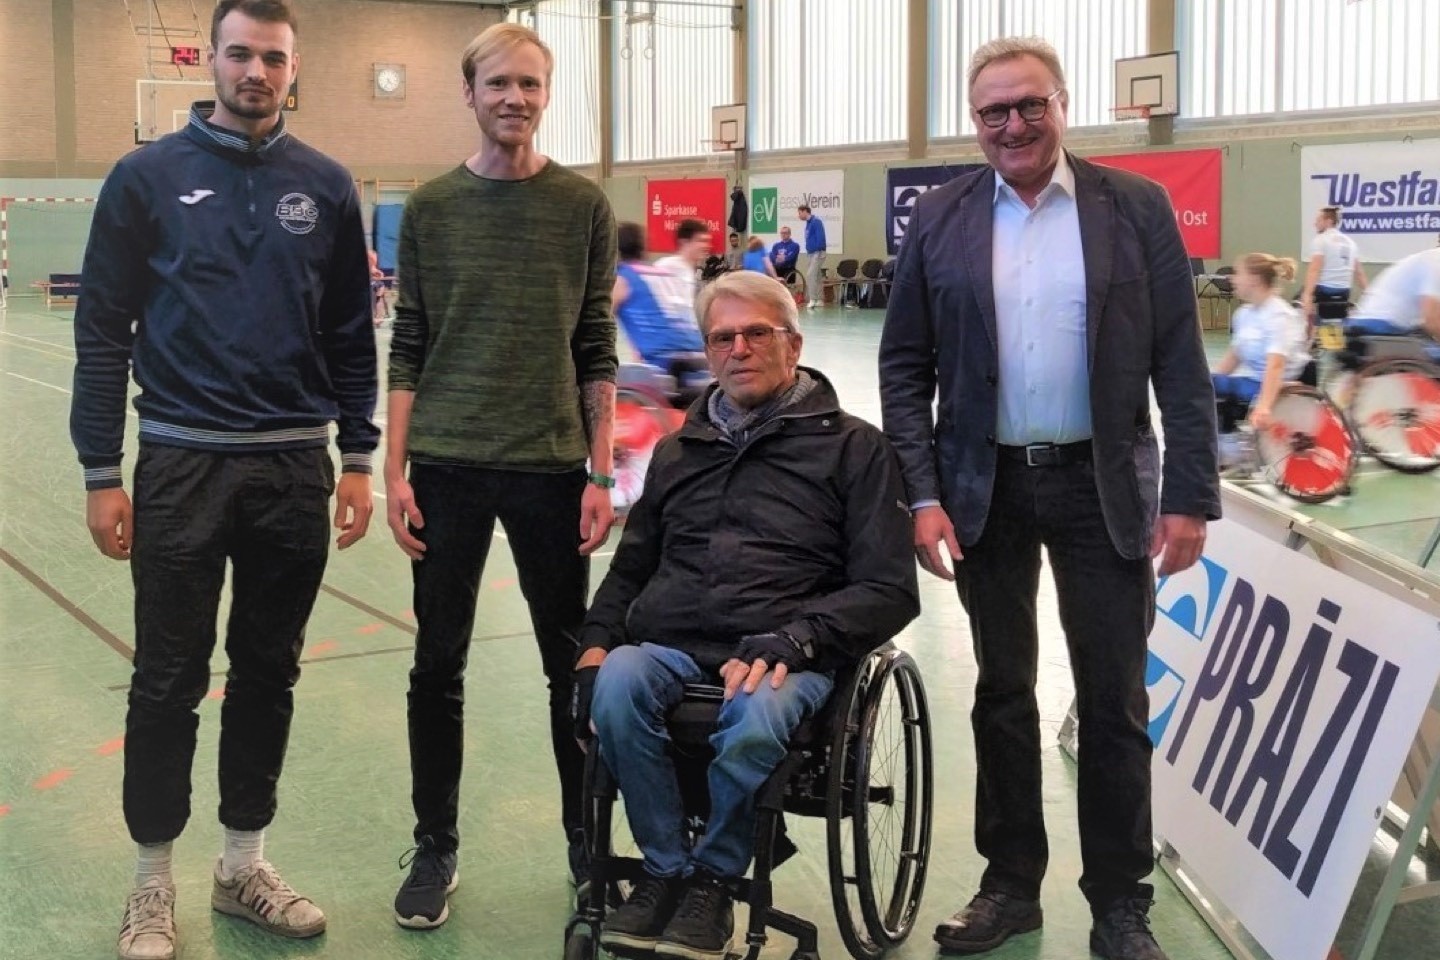 Stadtsportverband,Peter Huerkamp, Warendorf,BBC Münsterland,Dietmar Fedde,Rollstuhlbasketball,